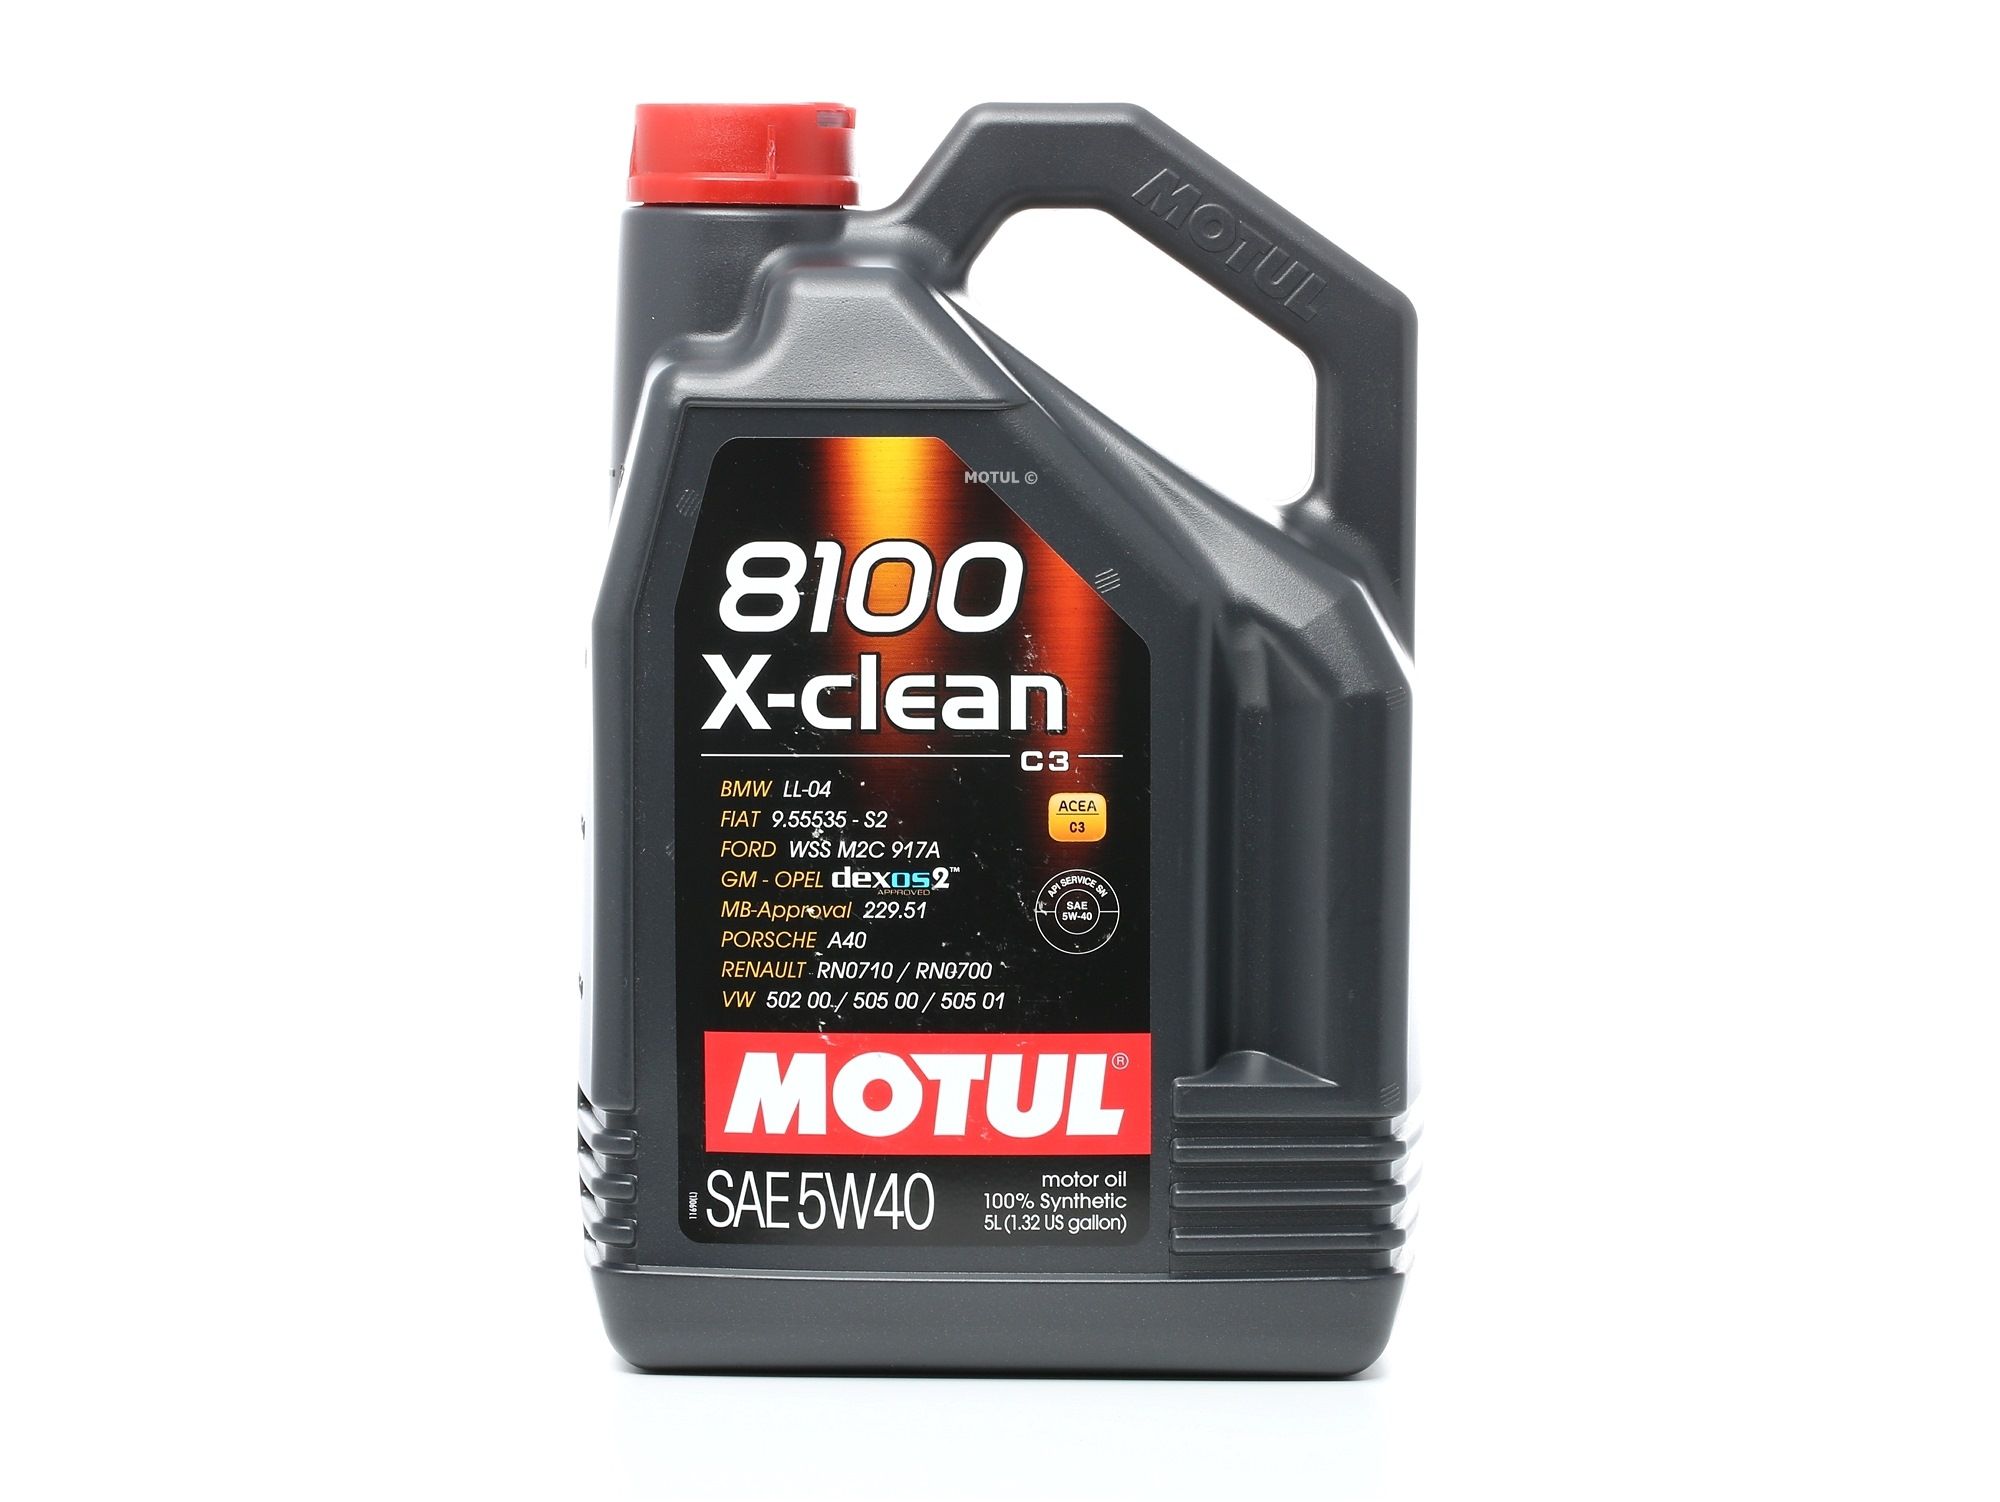 Buy Motor oil MOTUL petrol 102051 8100, X-clean 5W-40, 5l